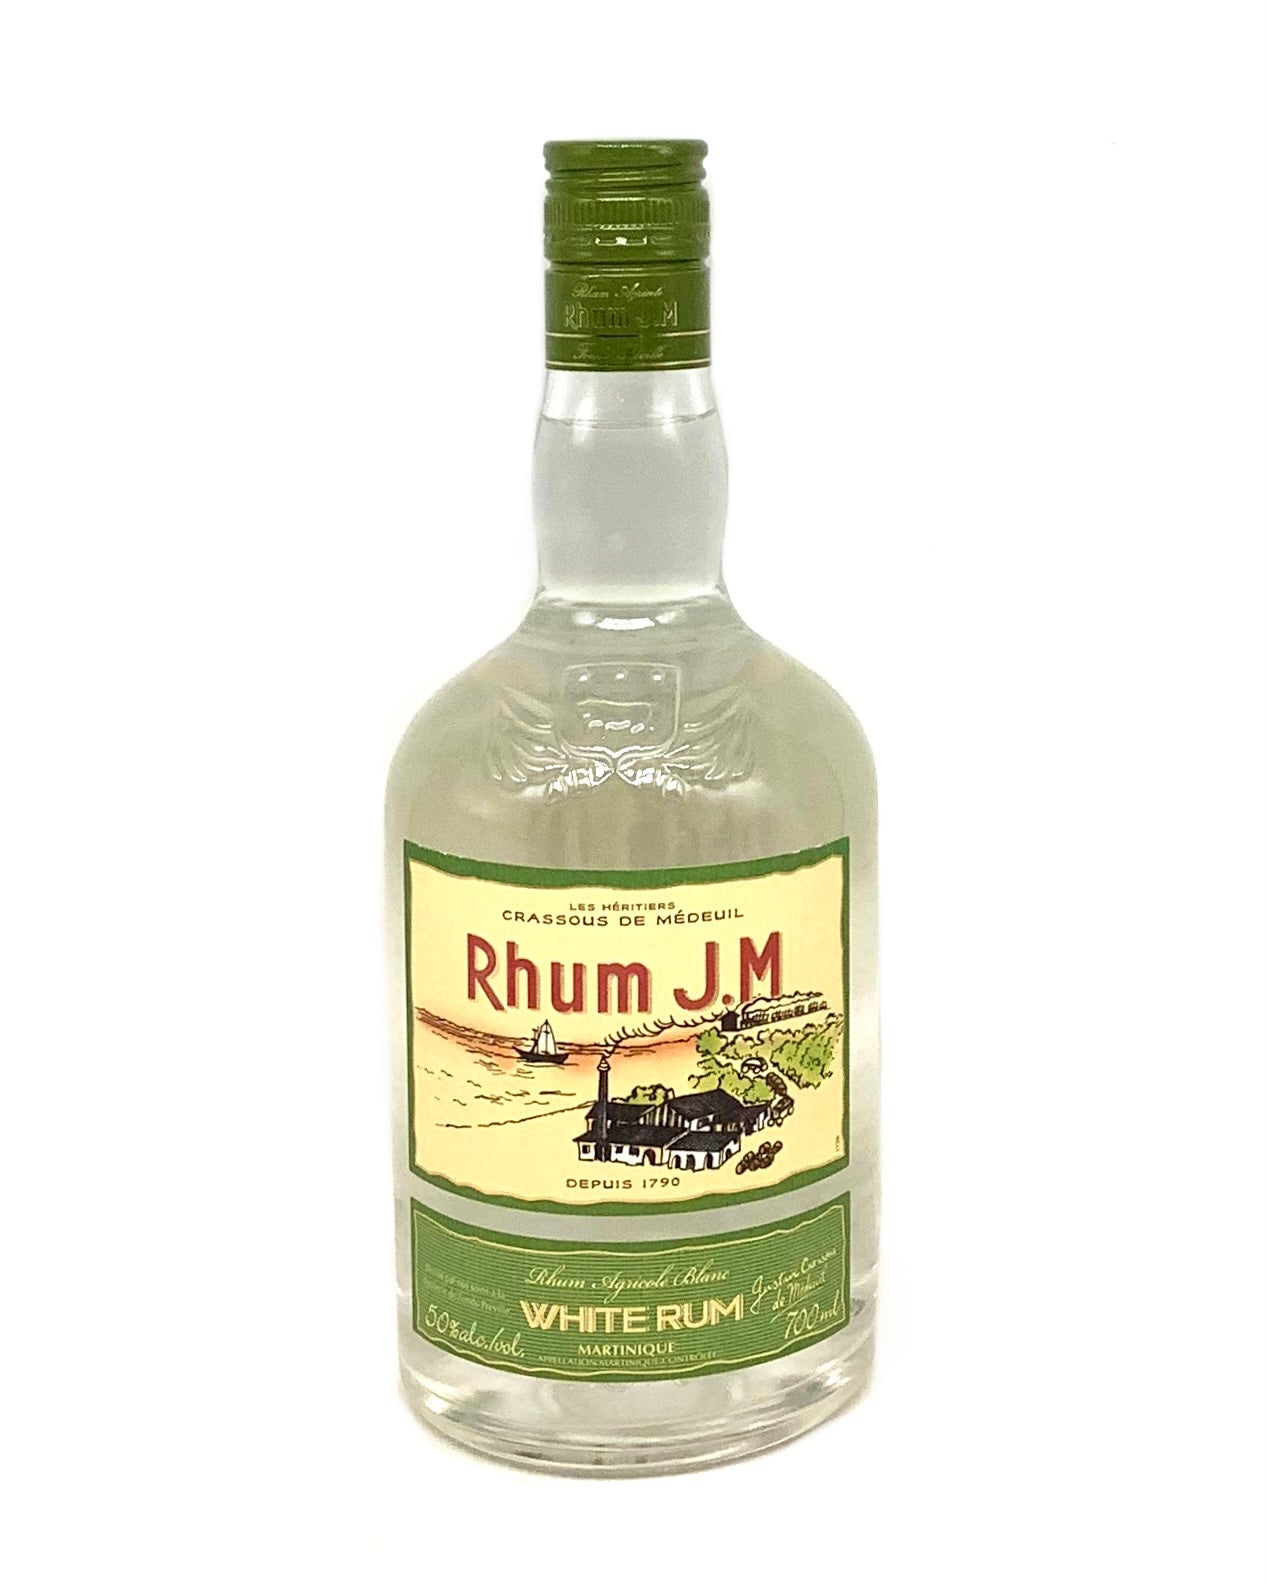 Rhum J.M White Rum "Rhum Agricole Blanc" 700ml